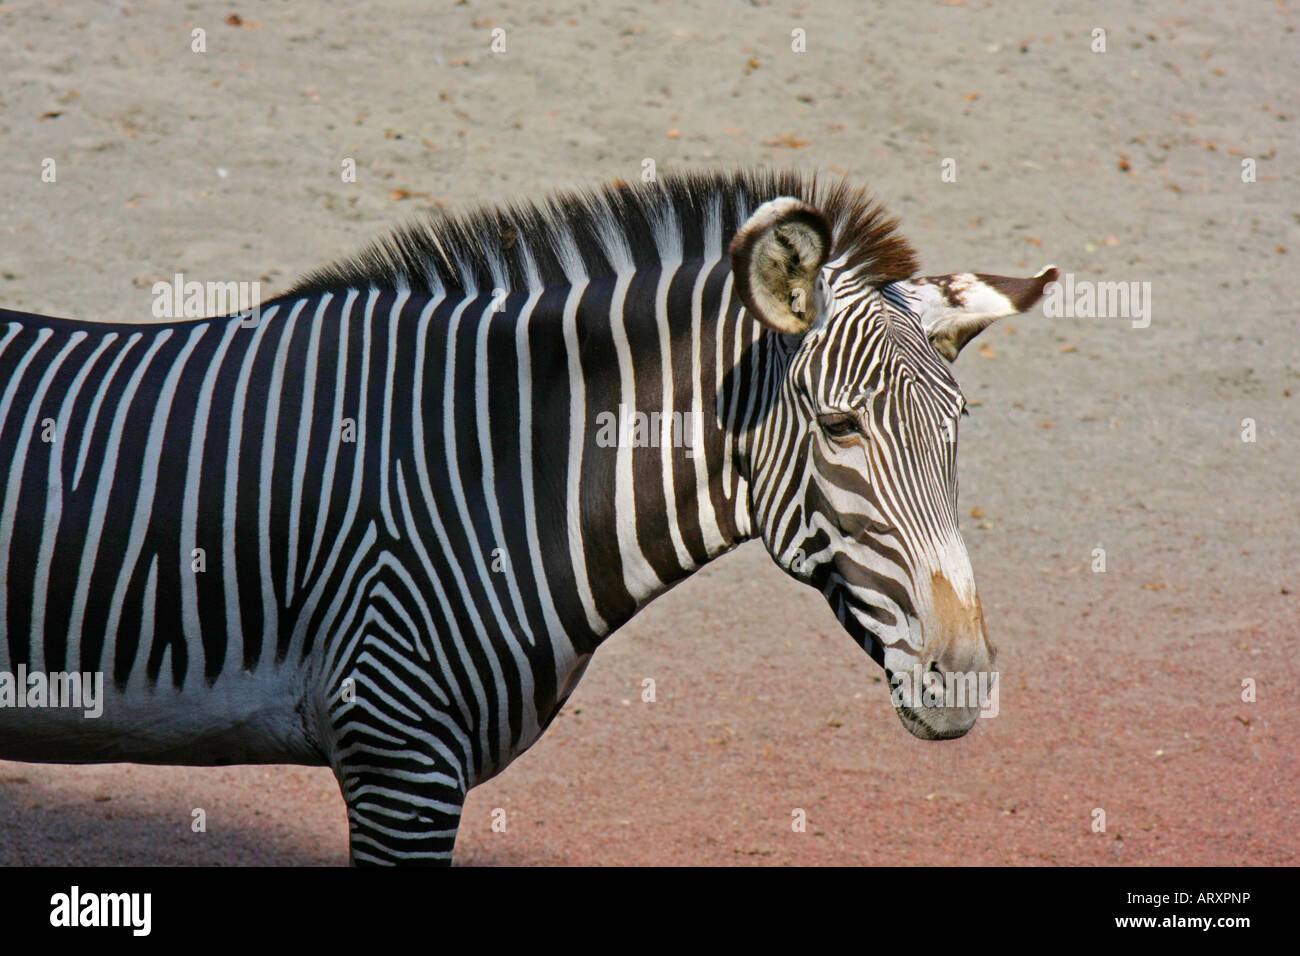 A Zebra in the Zoo Stock Photo